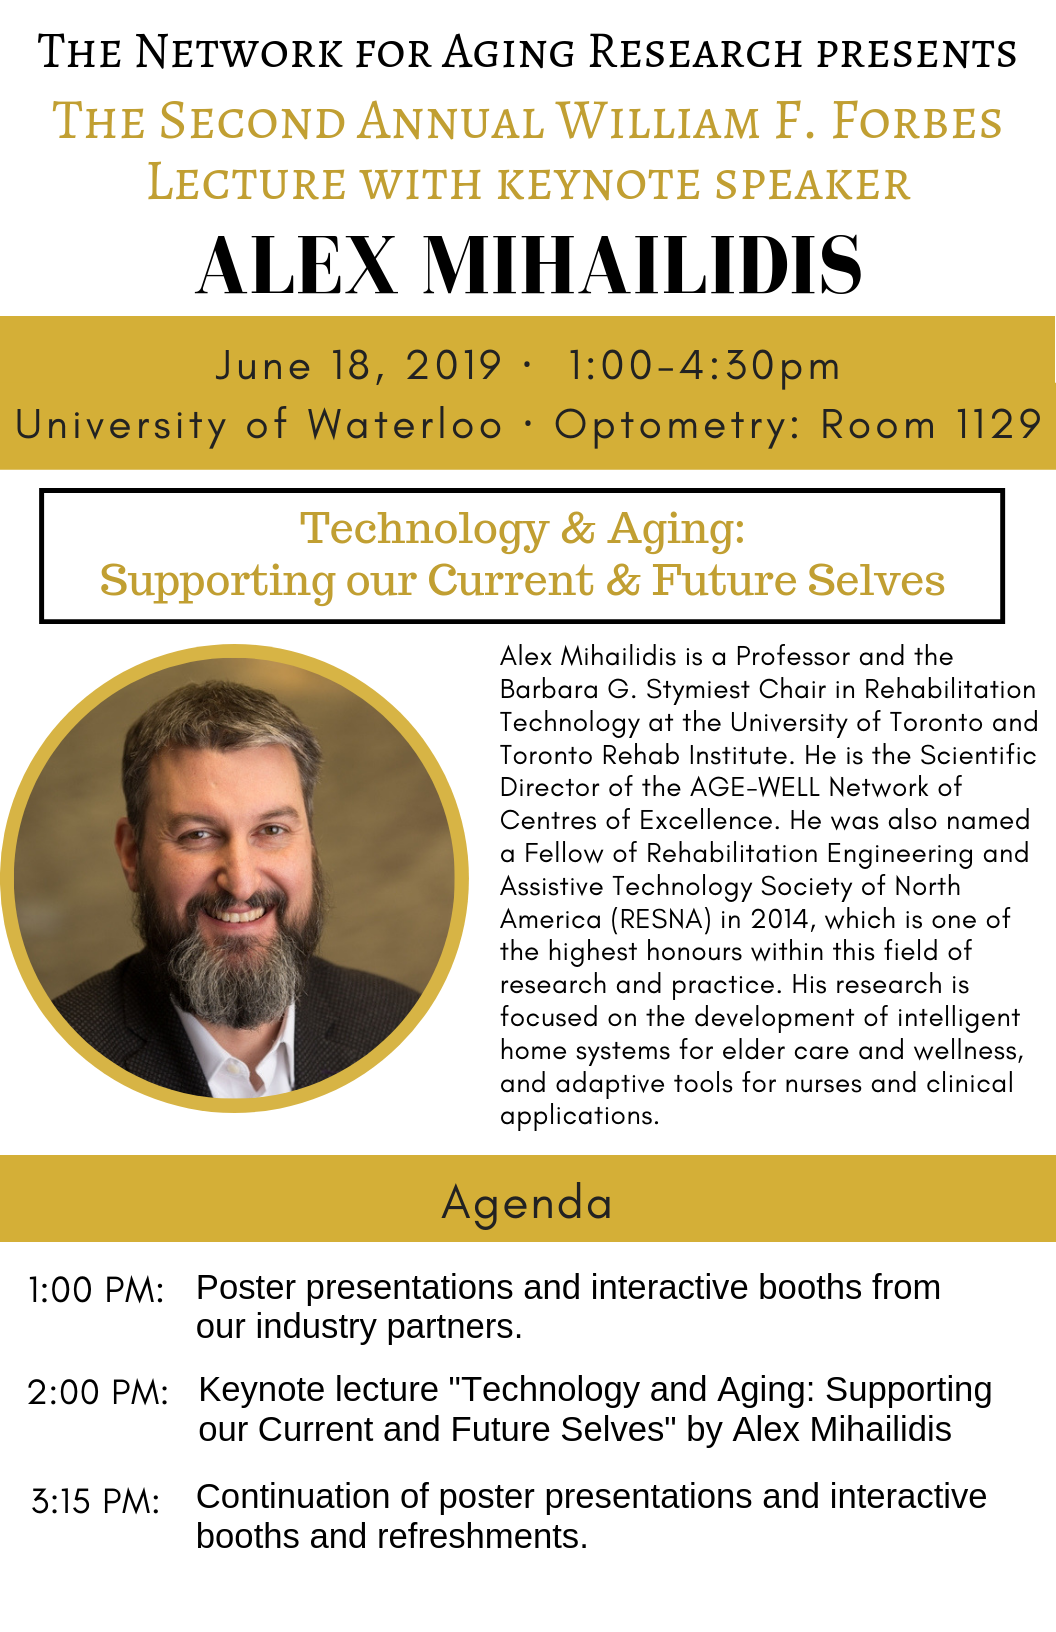 Alex Mihailidis keynote speaker June 18, 1pm-430pm